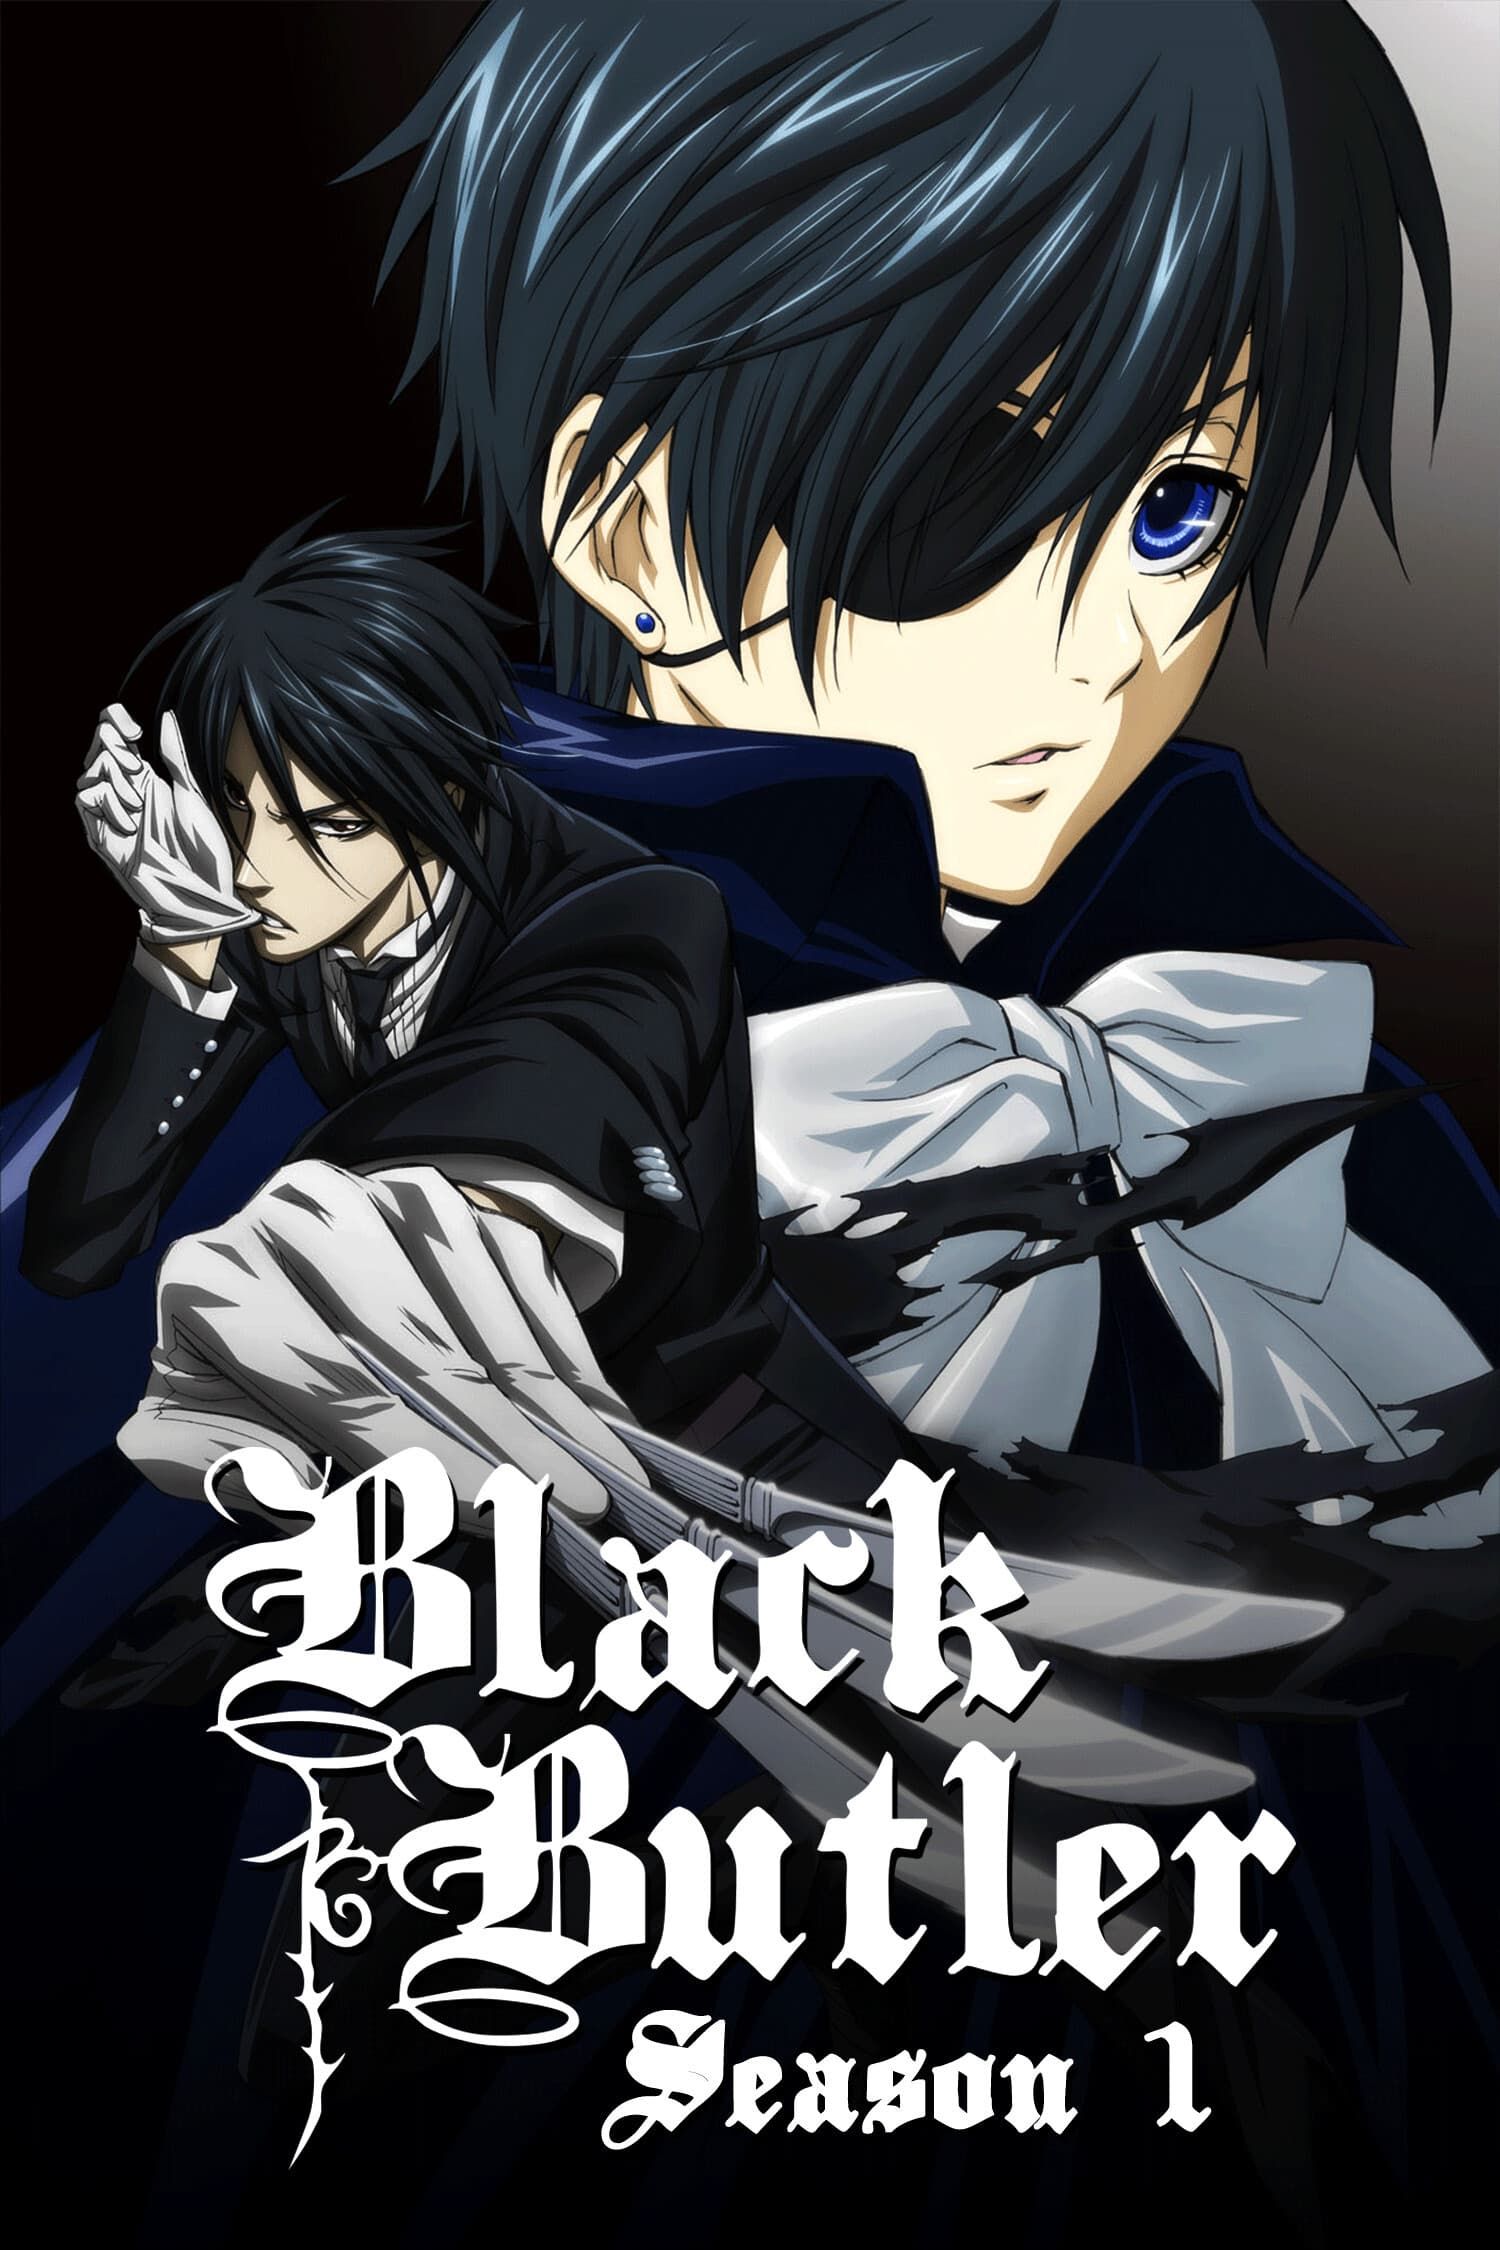 Watch Black Butler season 1 episode 4 streaming online